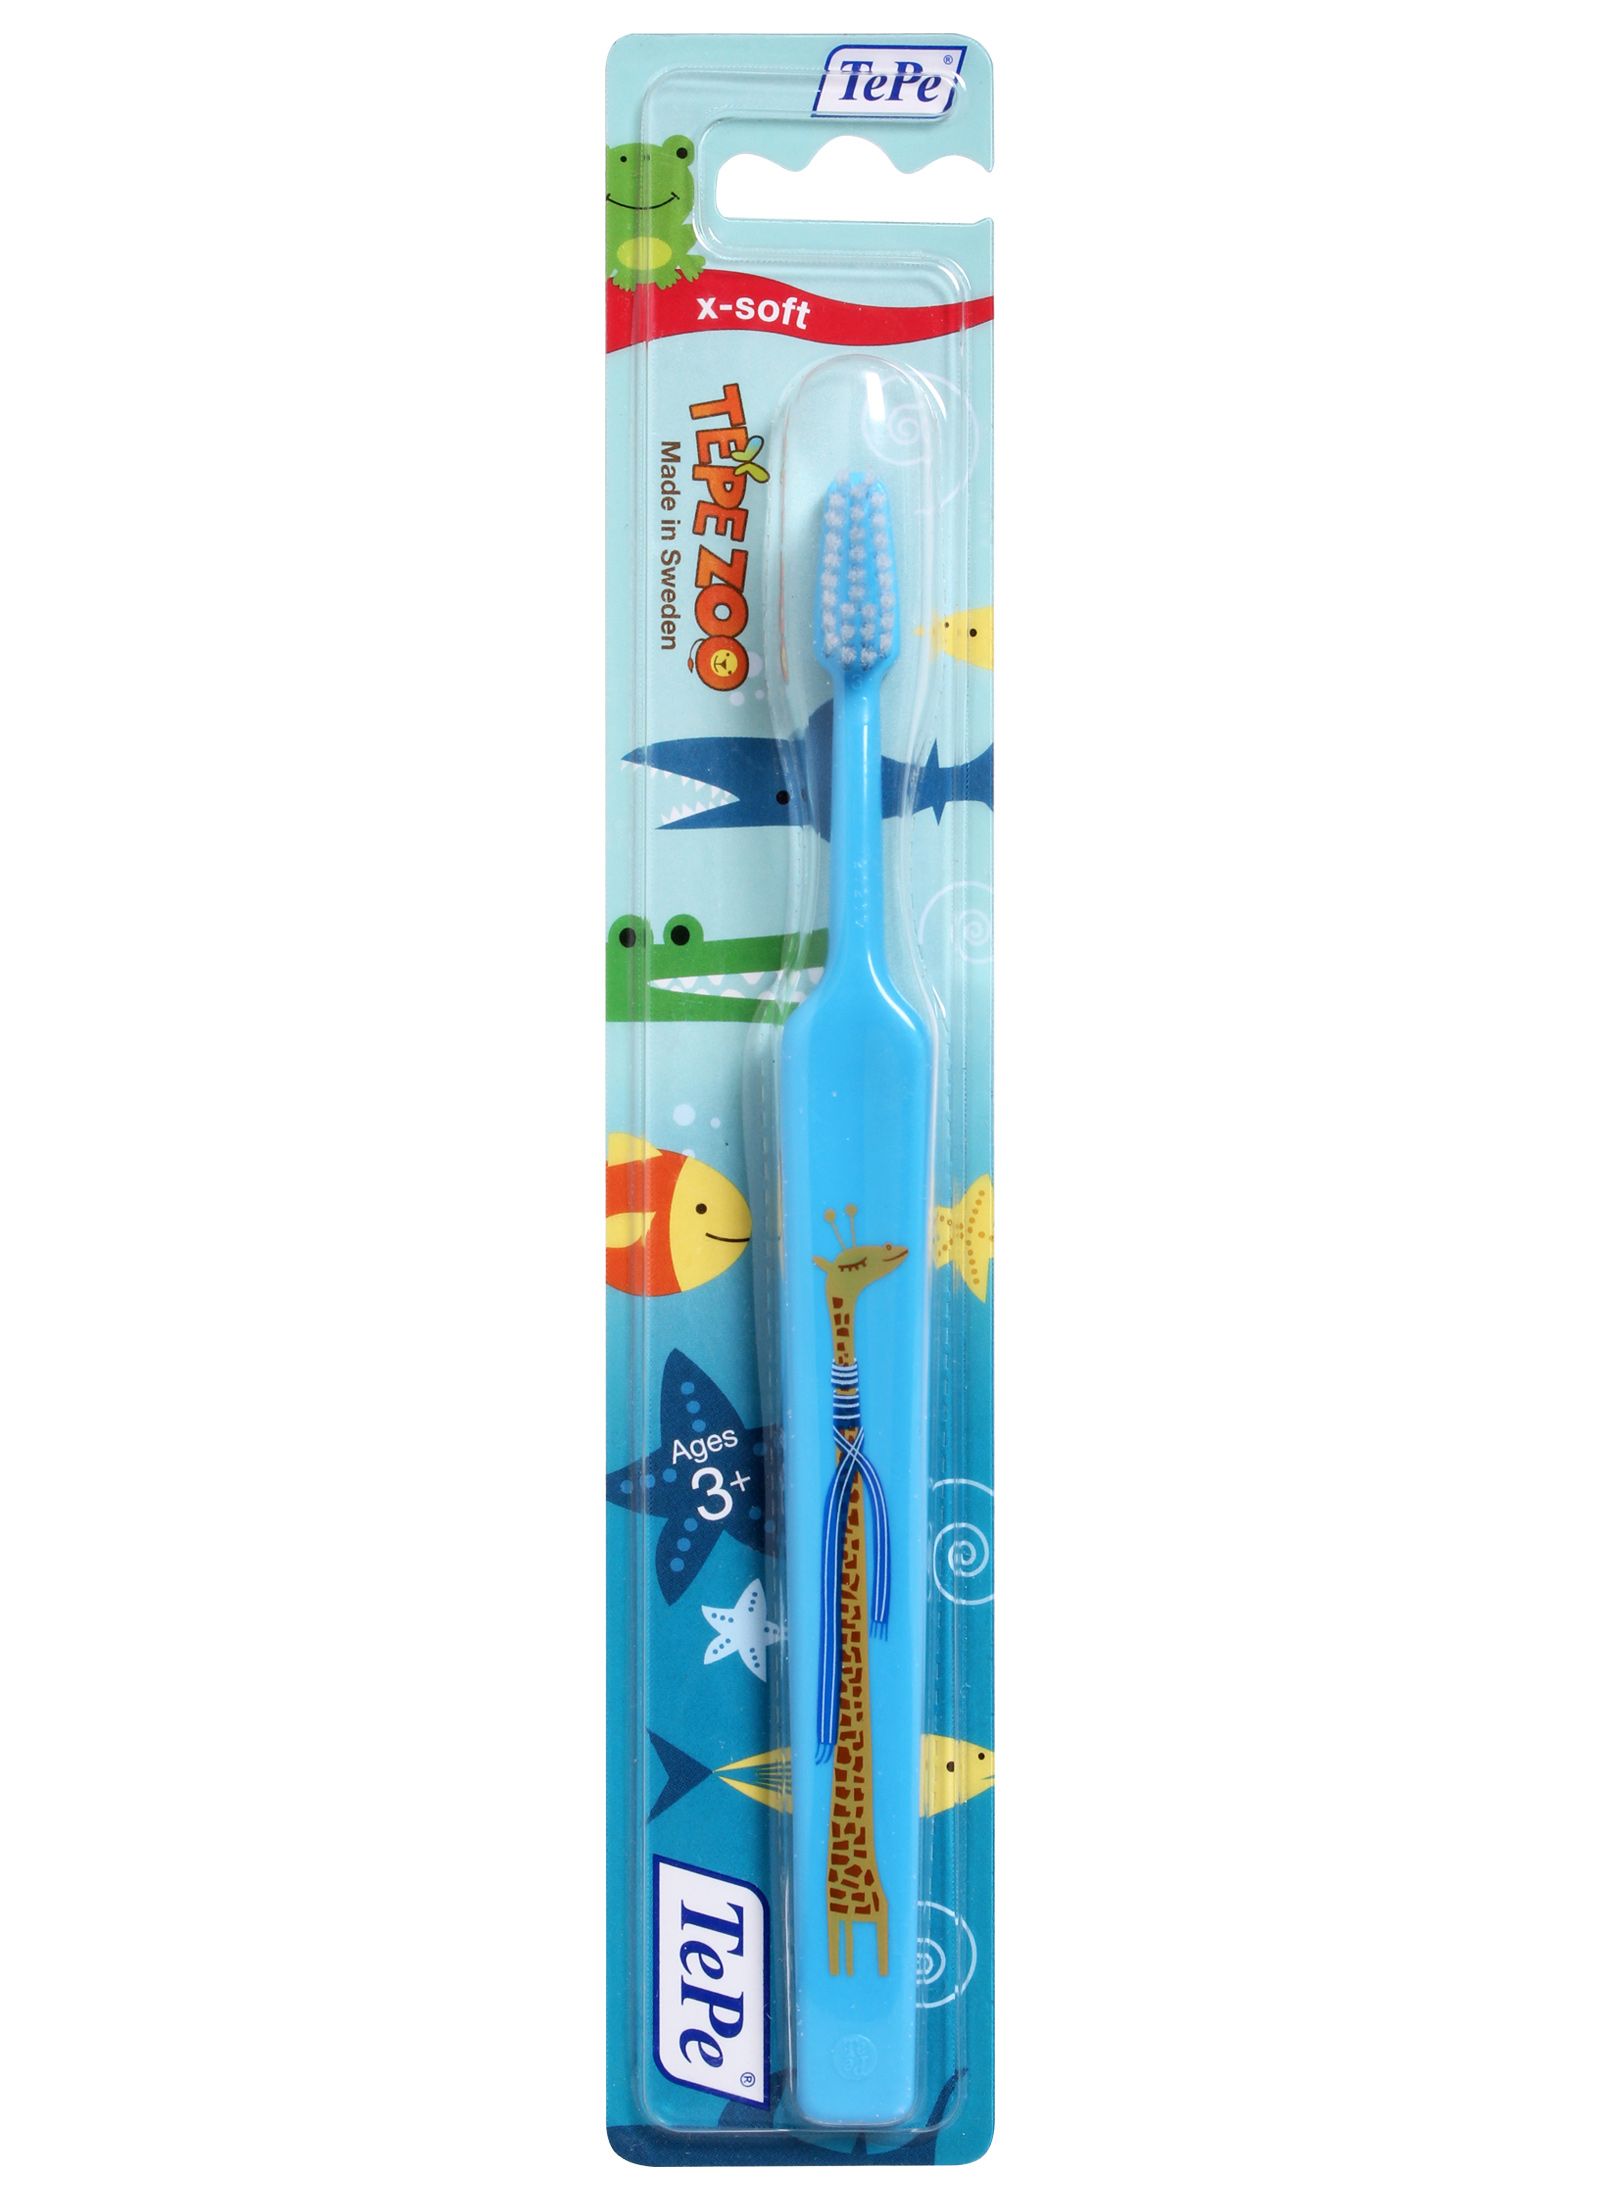 TePe Zoo X - Soft Toothbrush